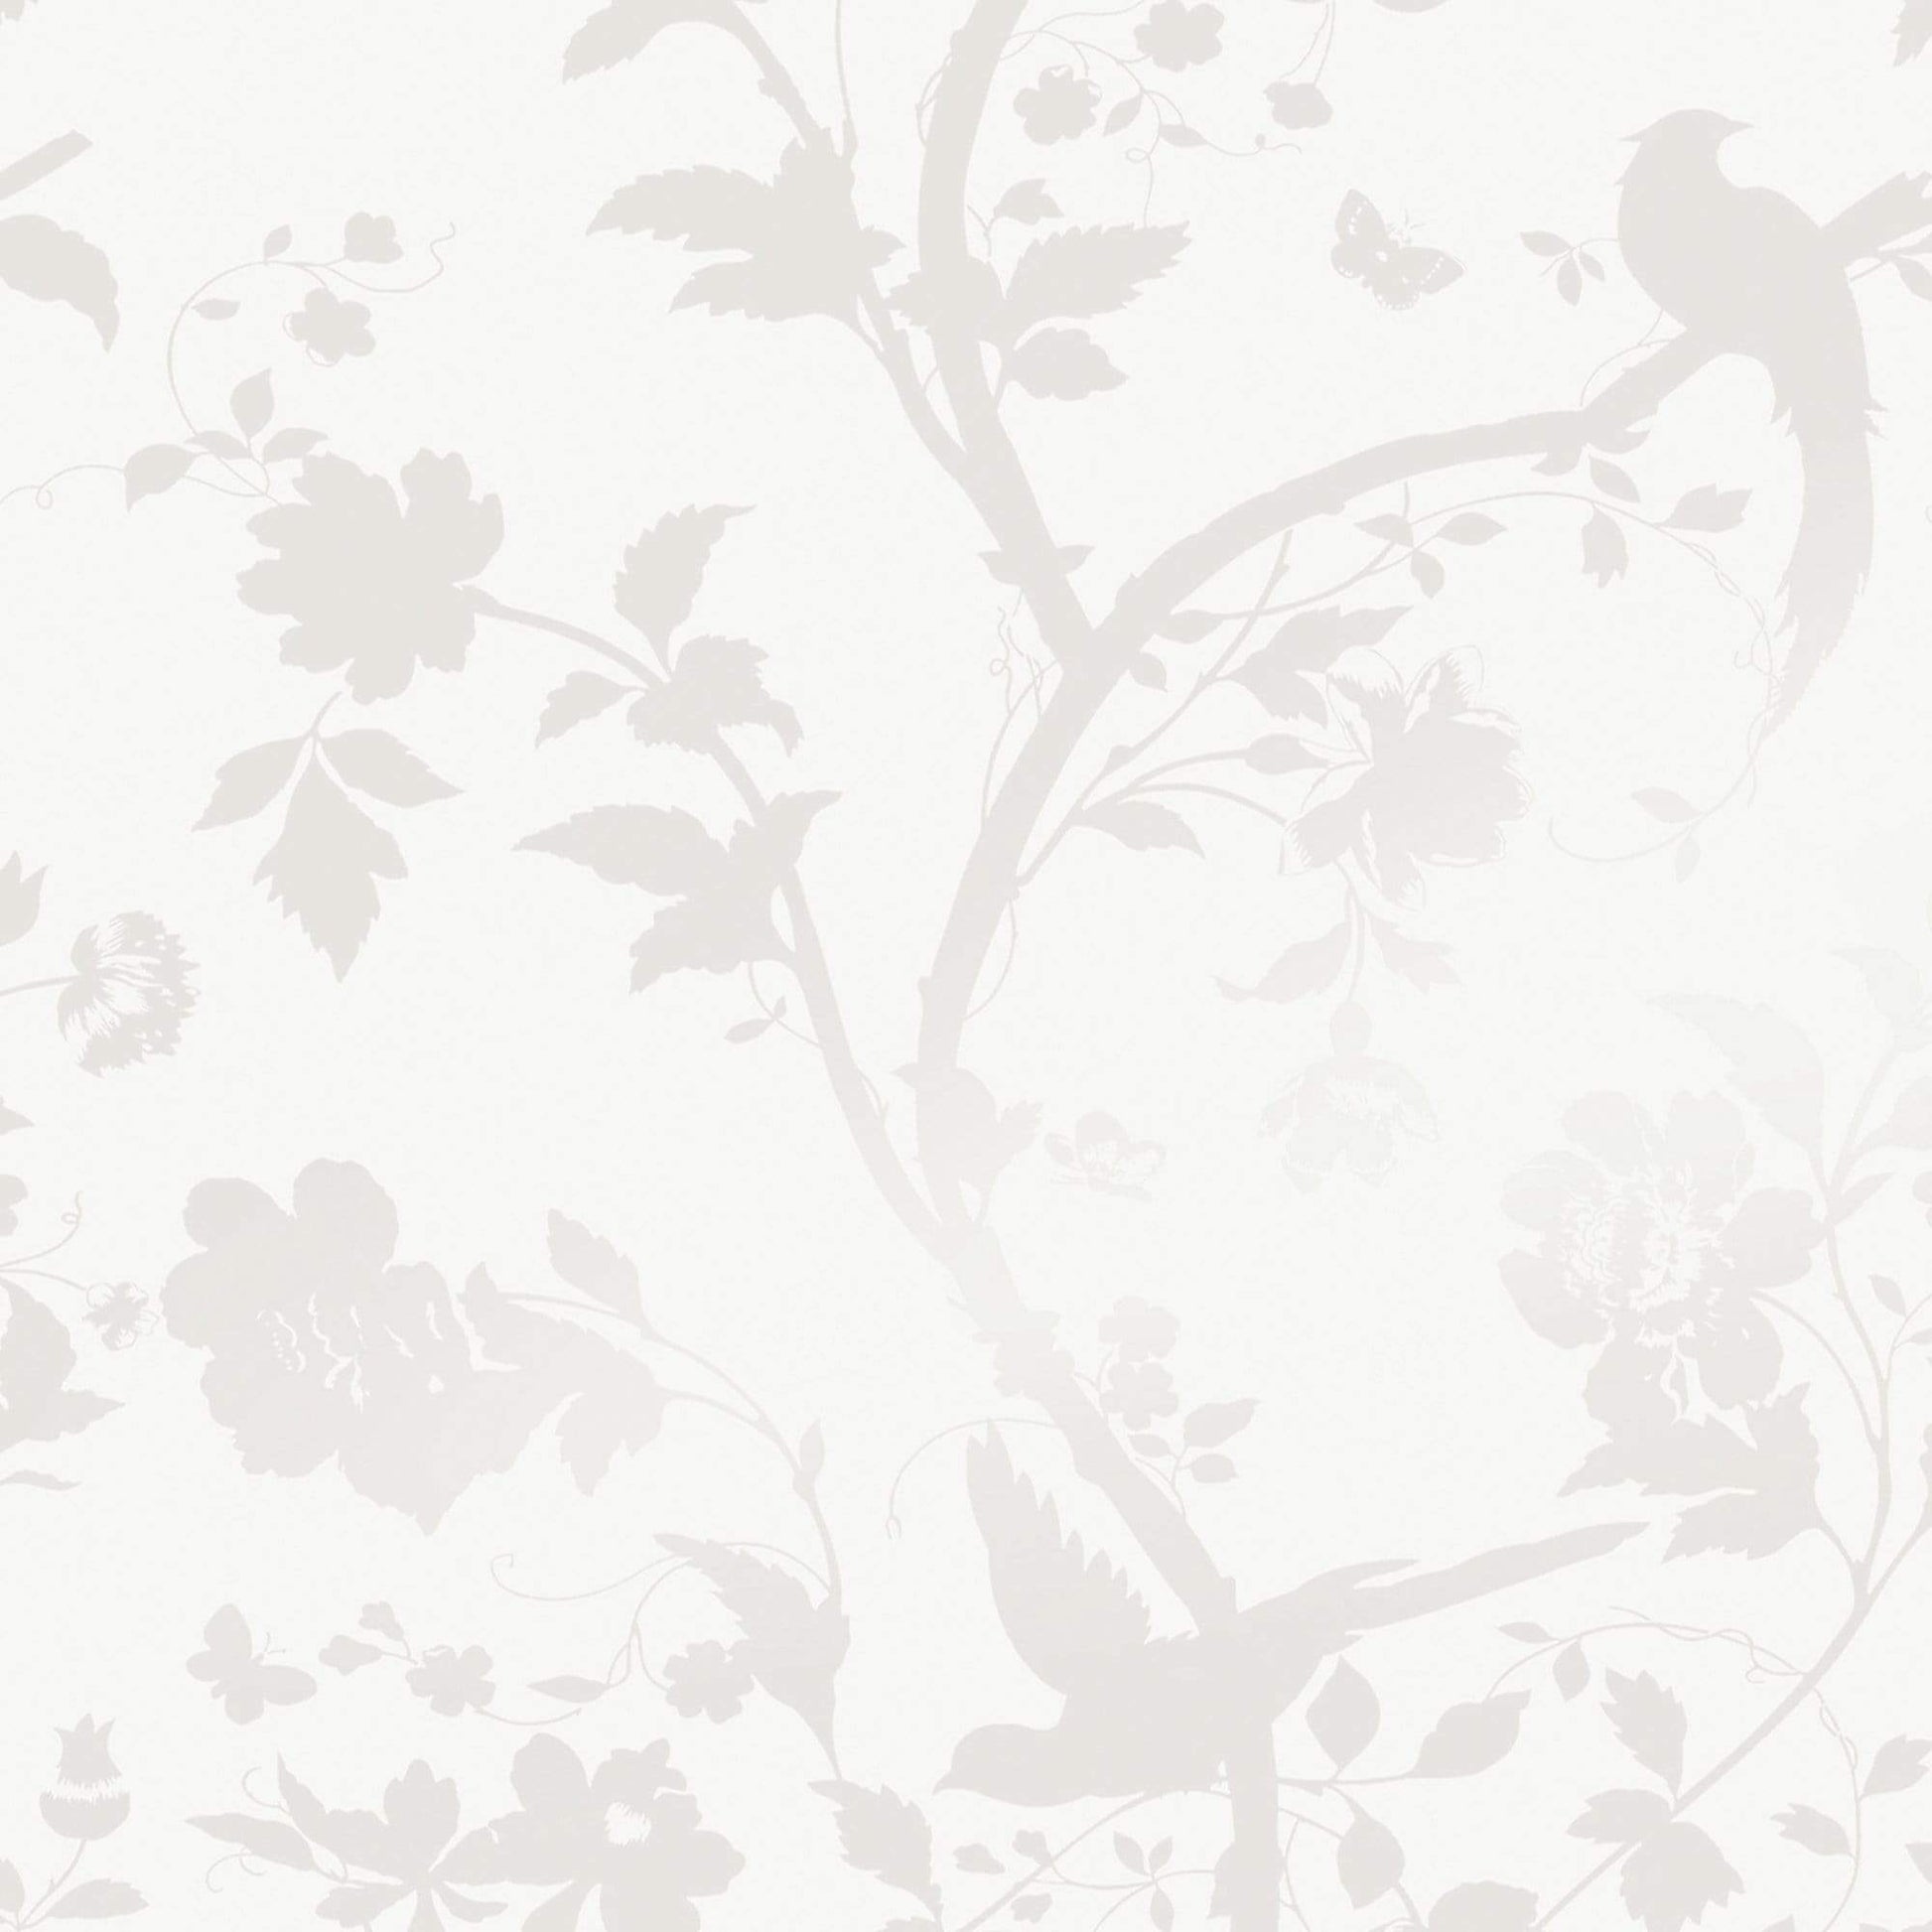 Wallpaper  -  Laura Ashley Oriental Garden Pearlescent White Wallpaper - 113391  -  60001931